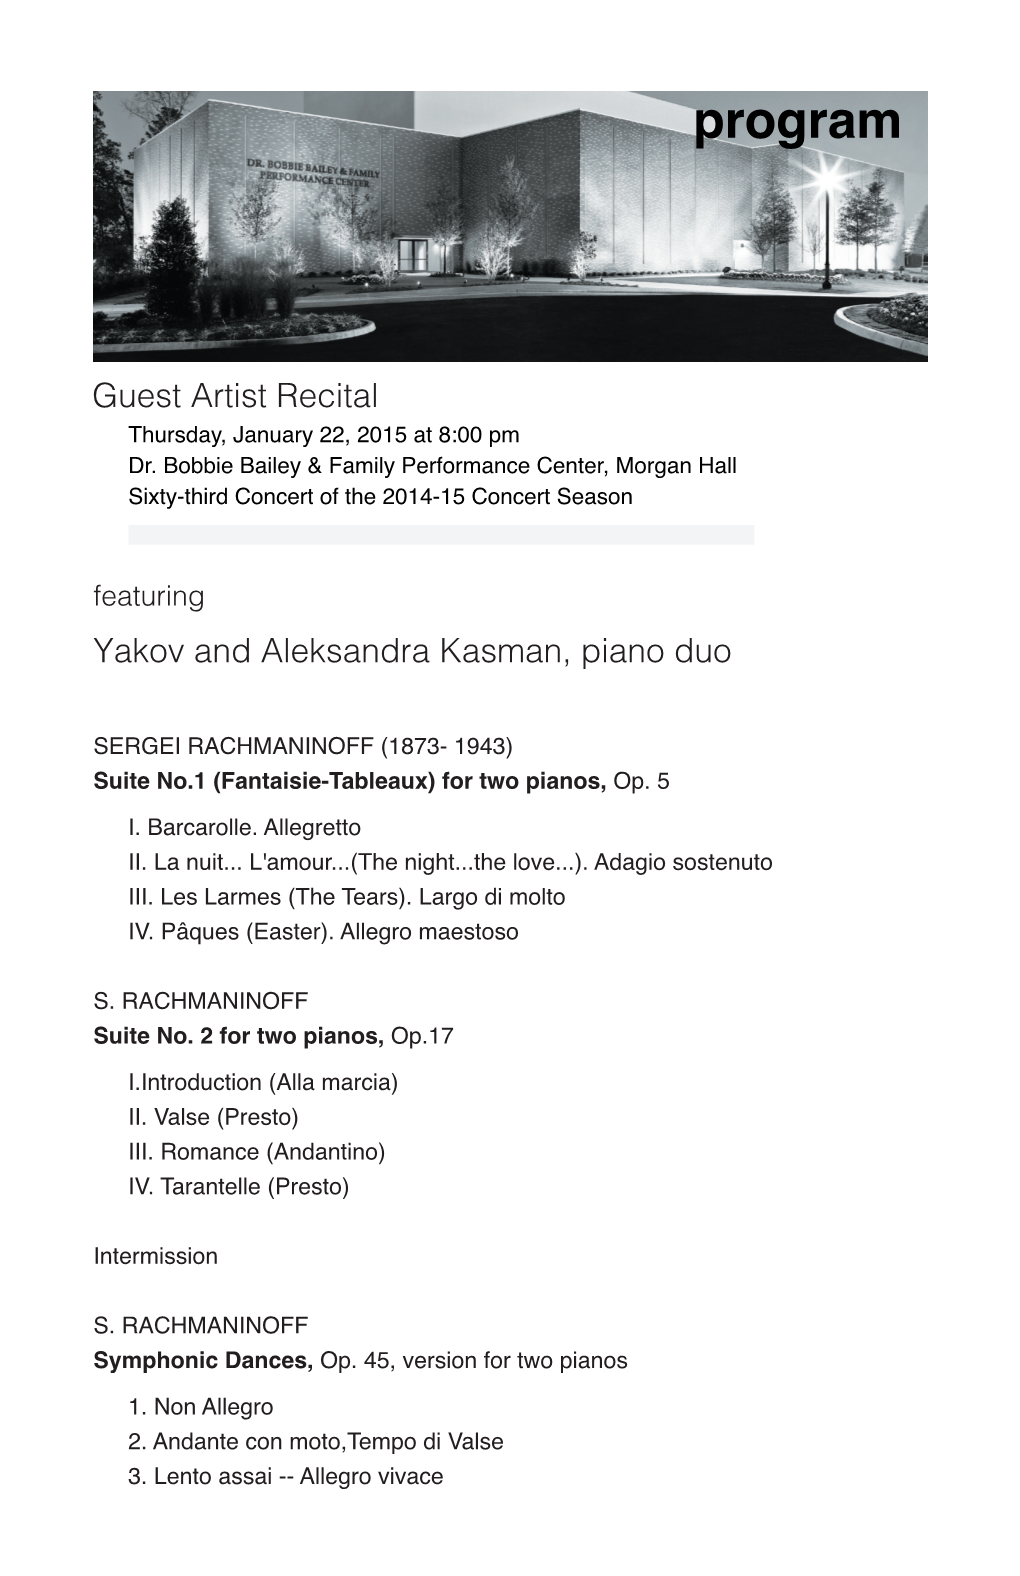 Guest Artist Recital: Yakov and Aleksandra Kasman, Piano